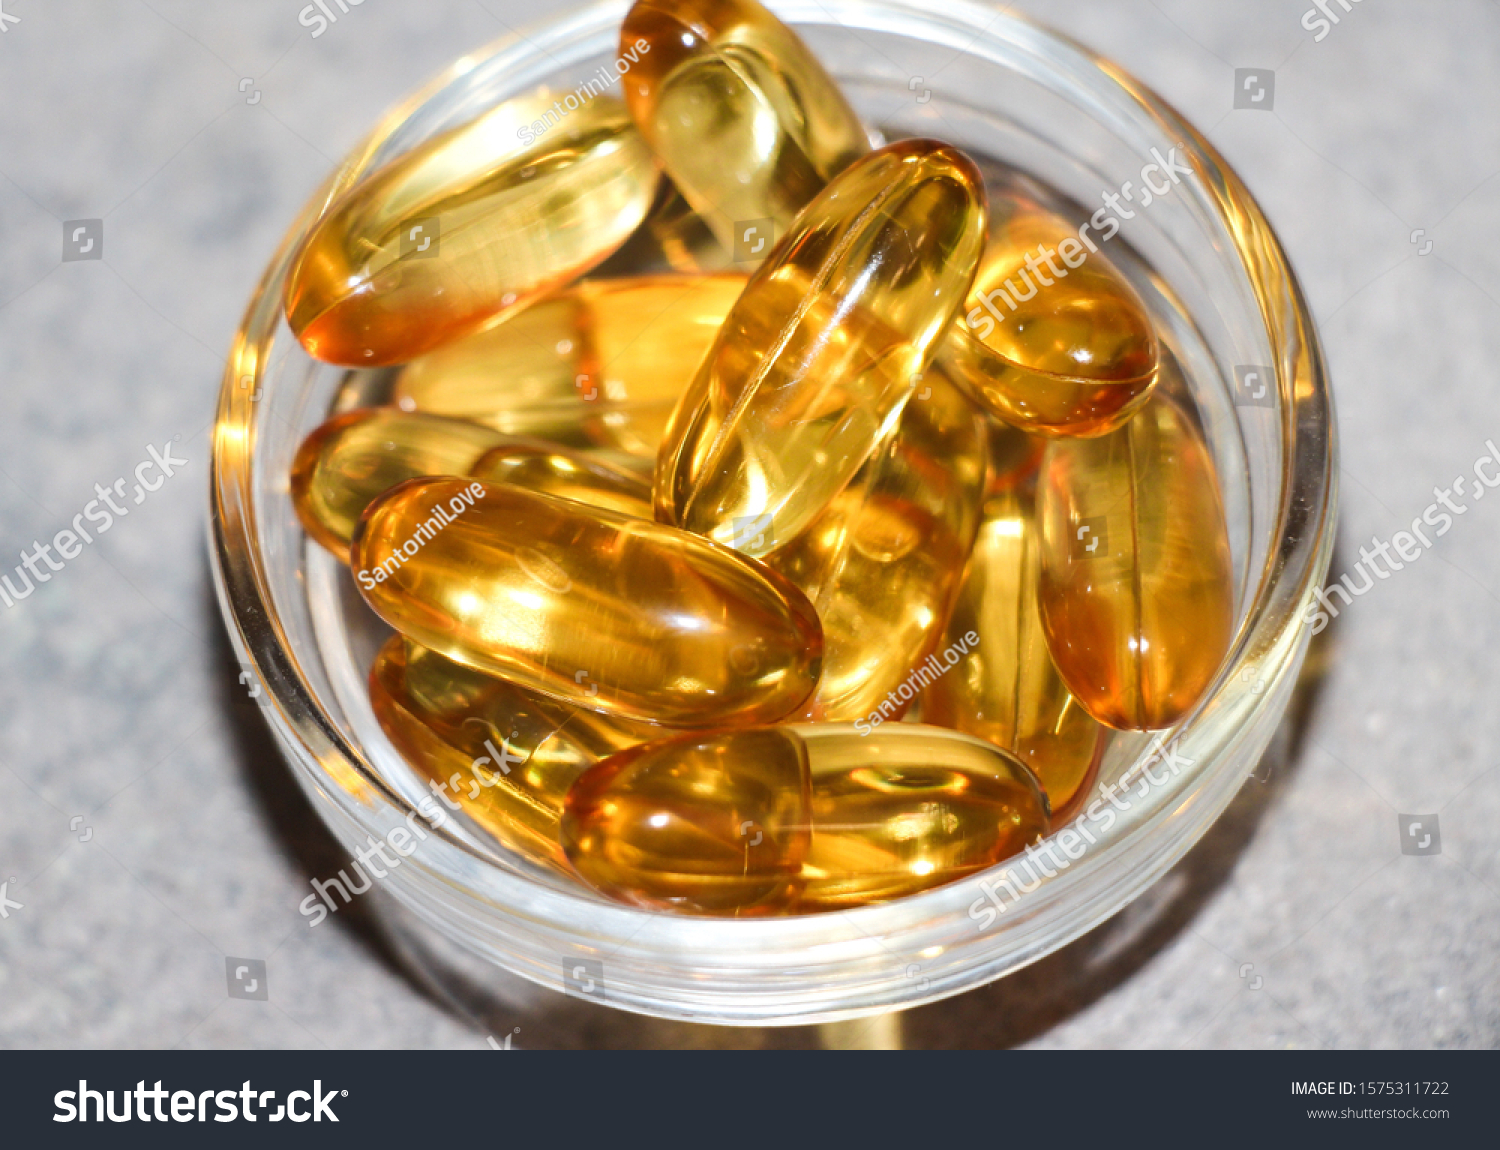 Realistic yellow gelatin capsule with omega 3. Omega-3 fish oil capsules #1575311722